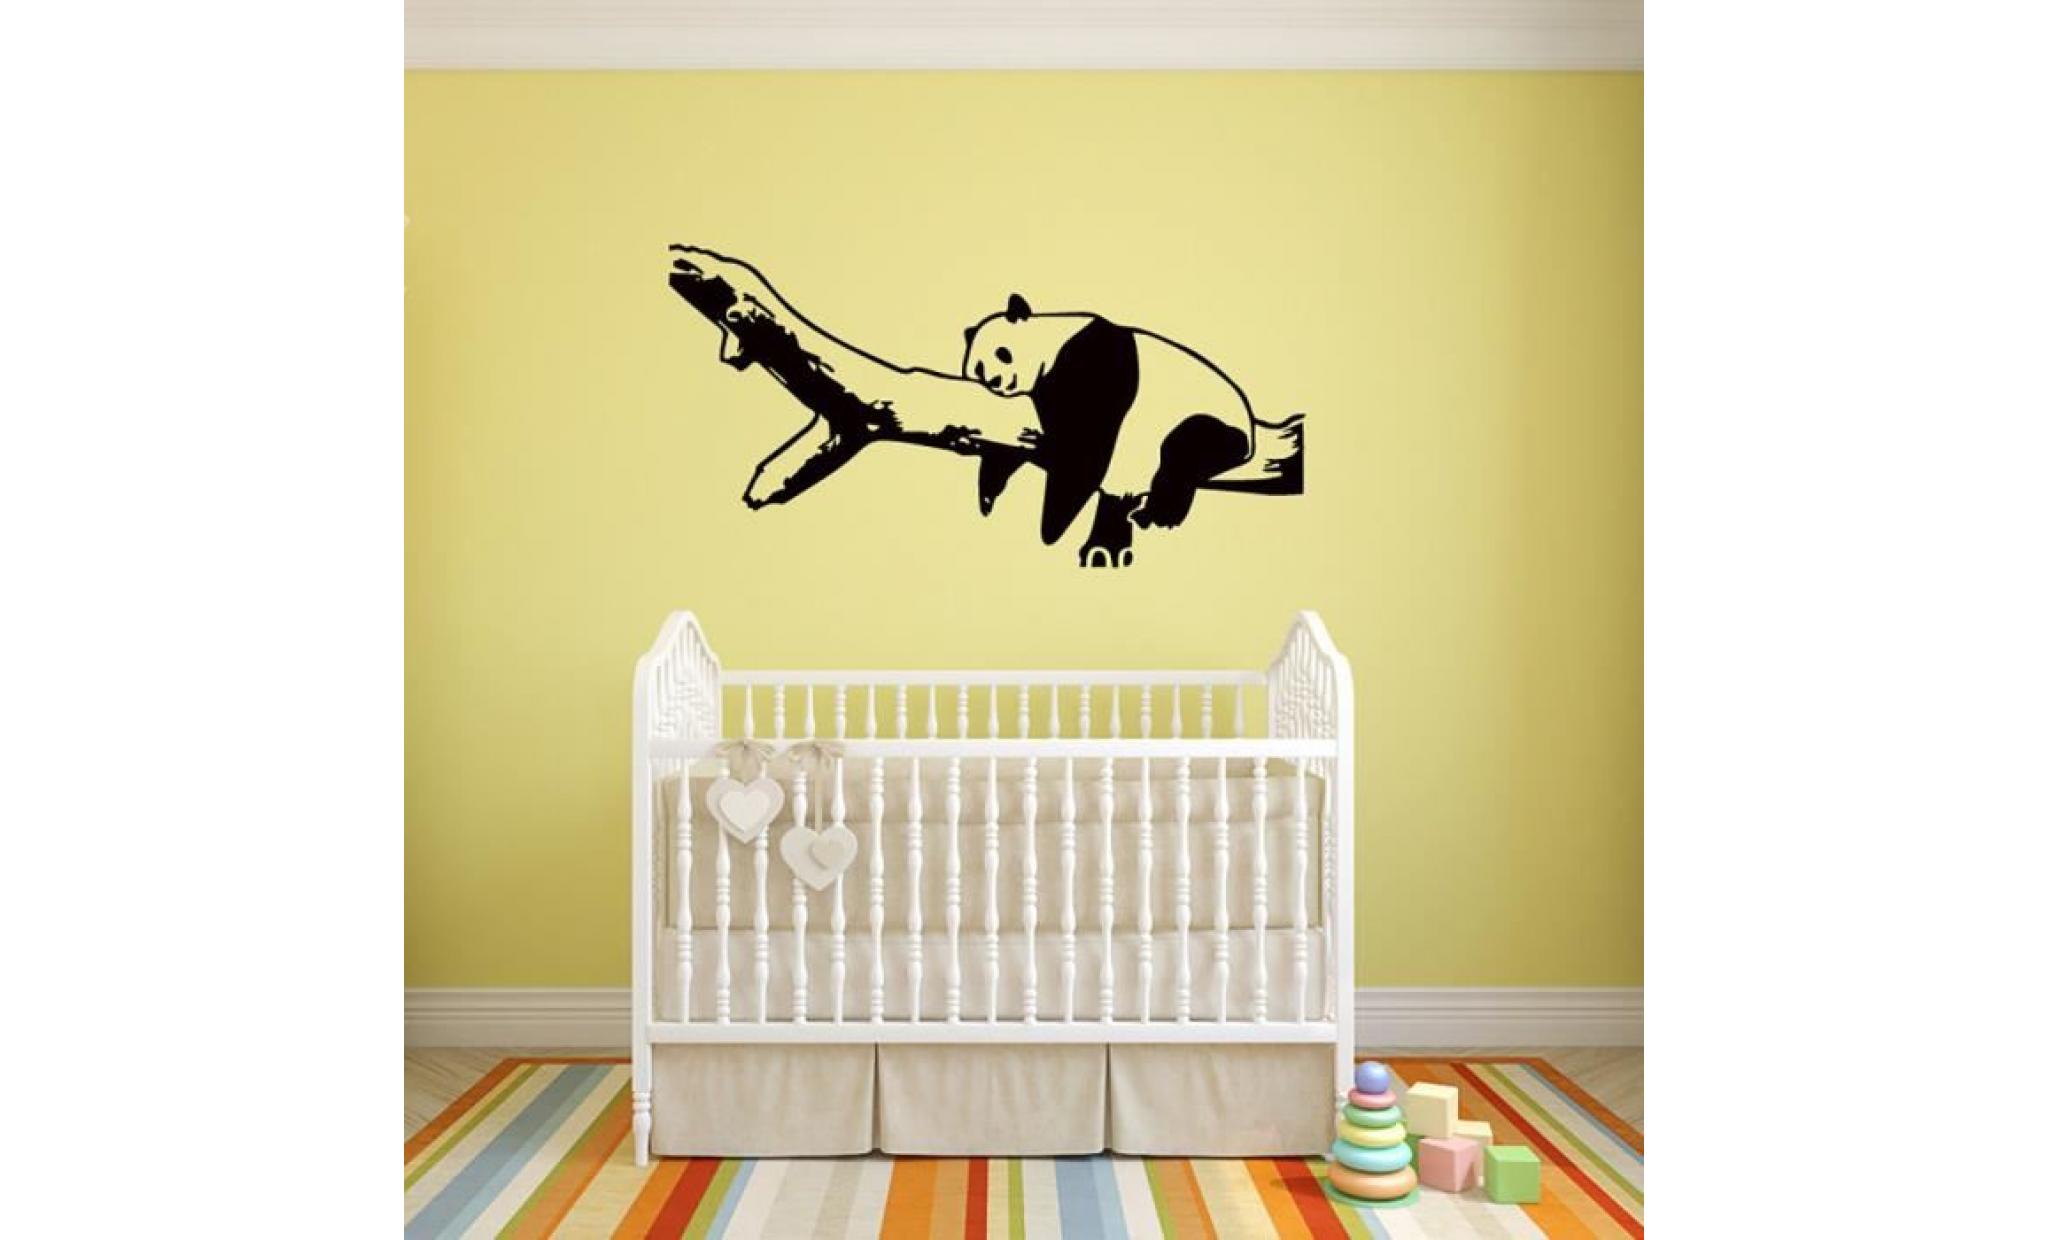 iportan® panda wall sticker amovible décalques art mural living room decors multicolore _love906 pas cher